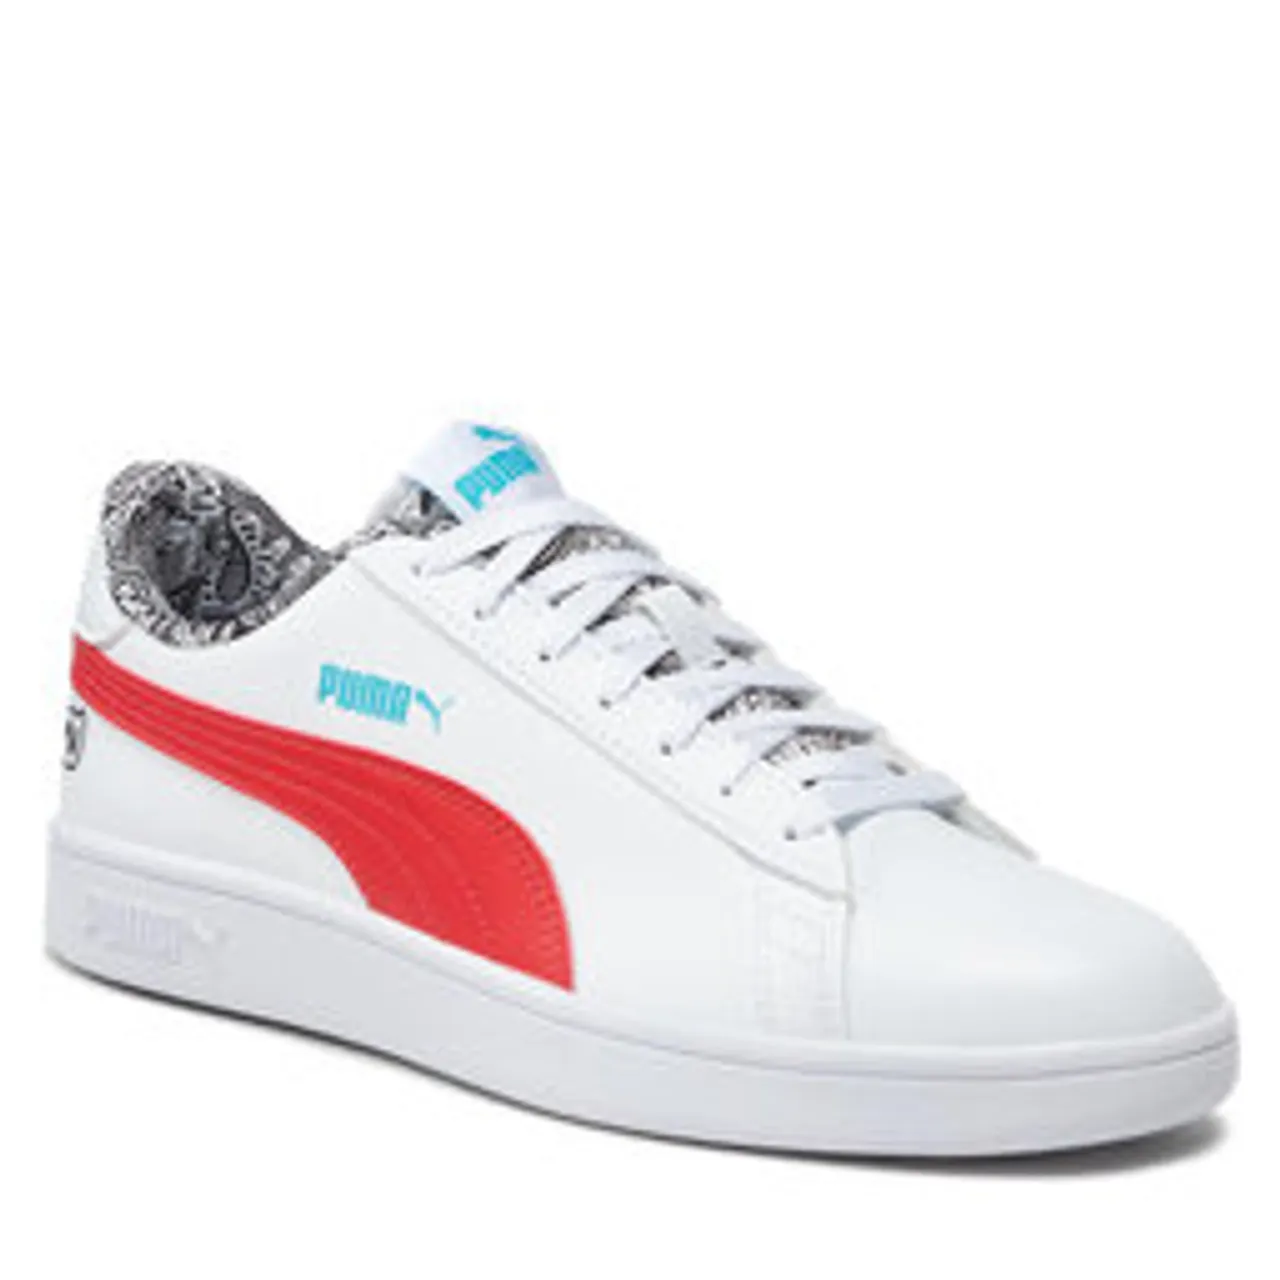 Sneakers Puma Smash V2 Me Happy 386396 01 White/Red/Blue/Atoll/Black